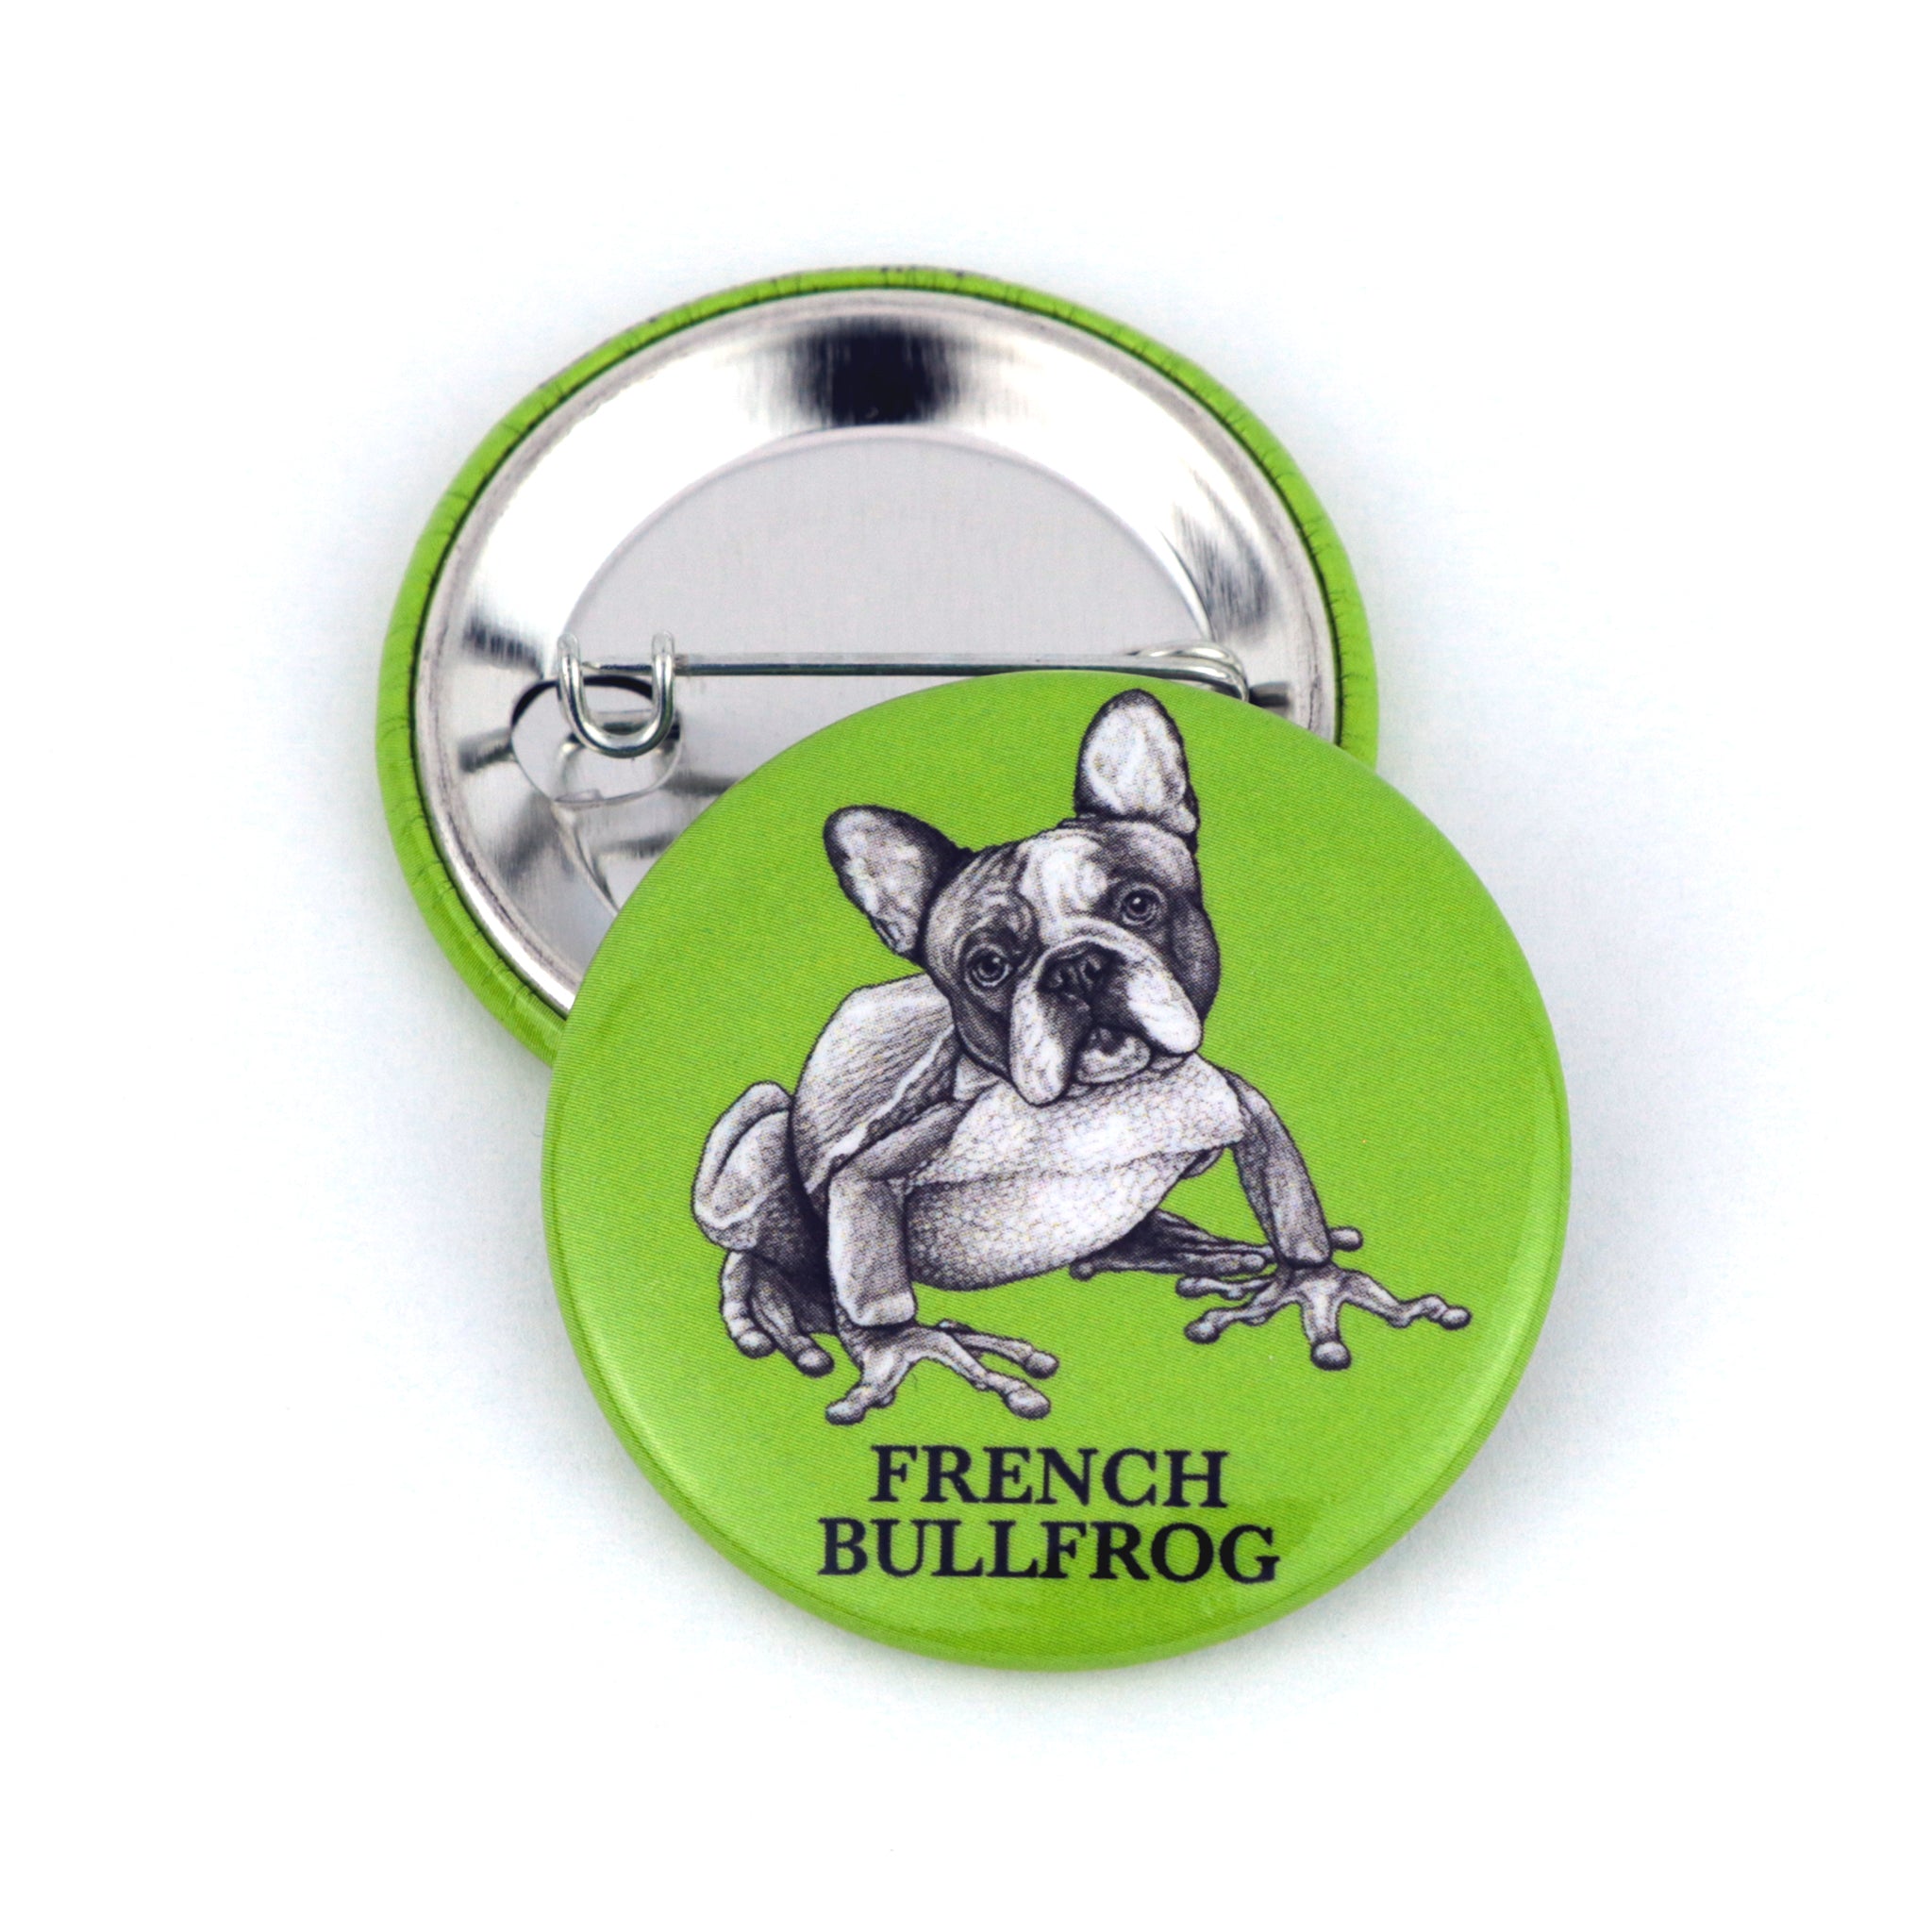 French Bullfrog 1.5" Pinback Button